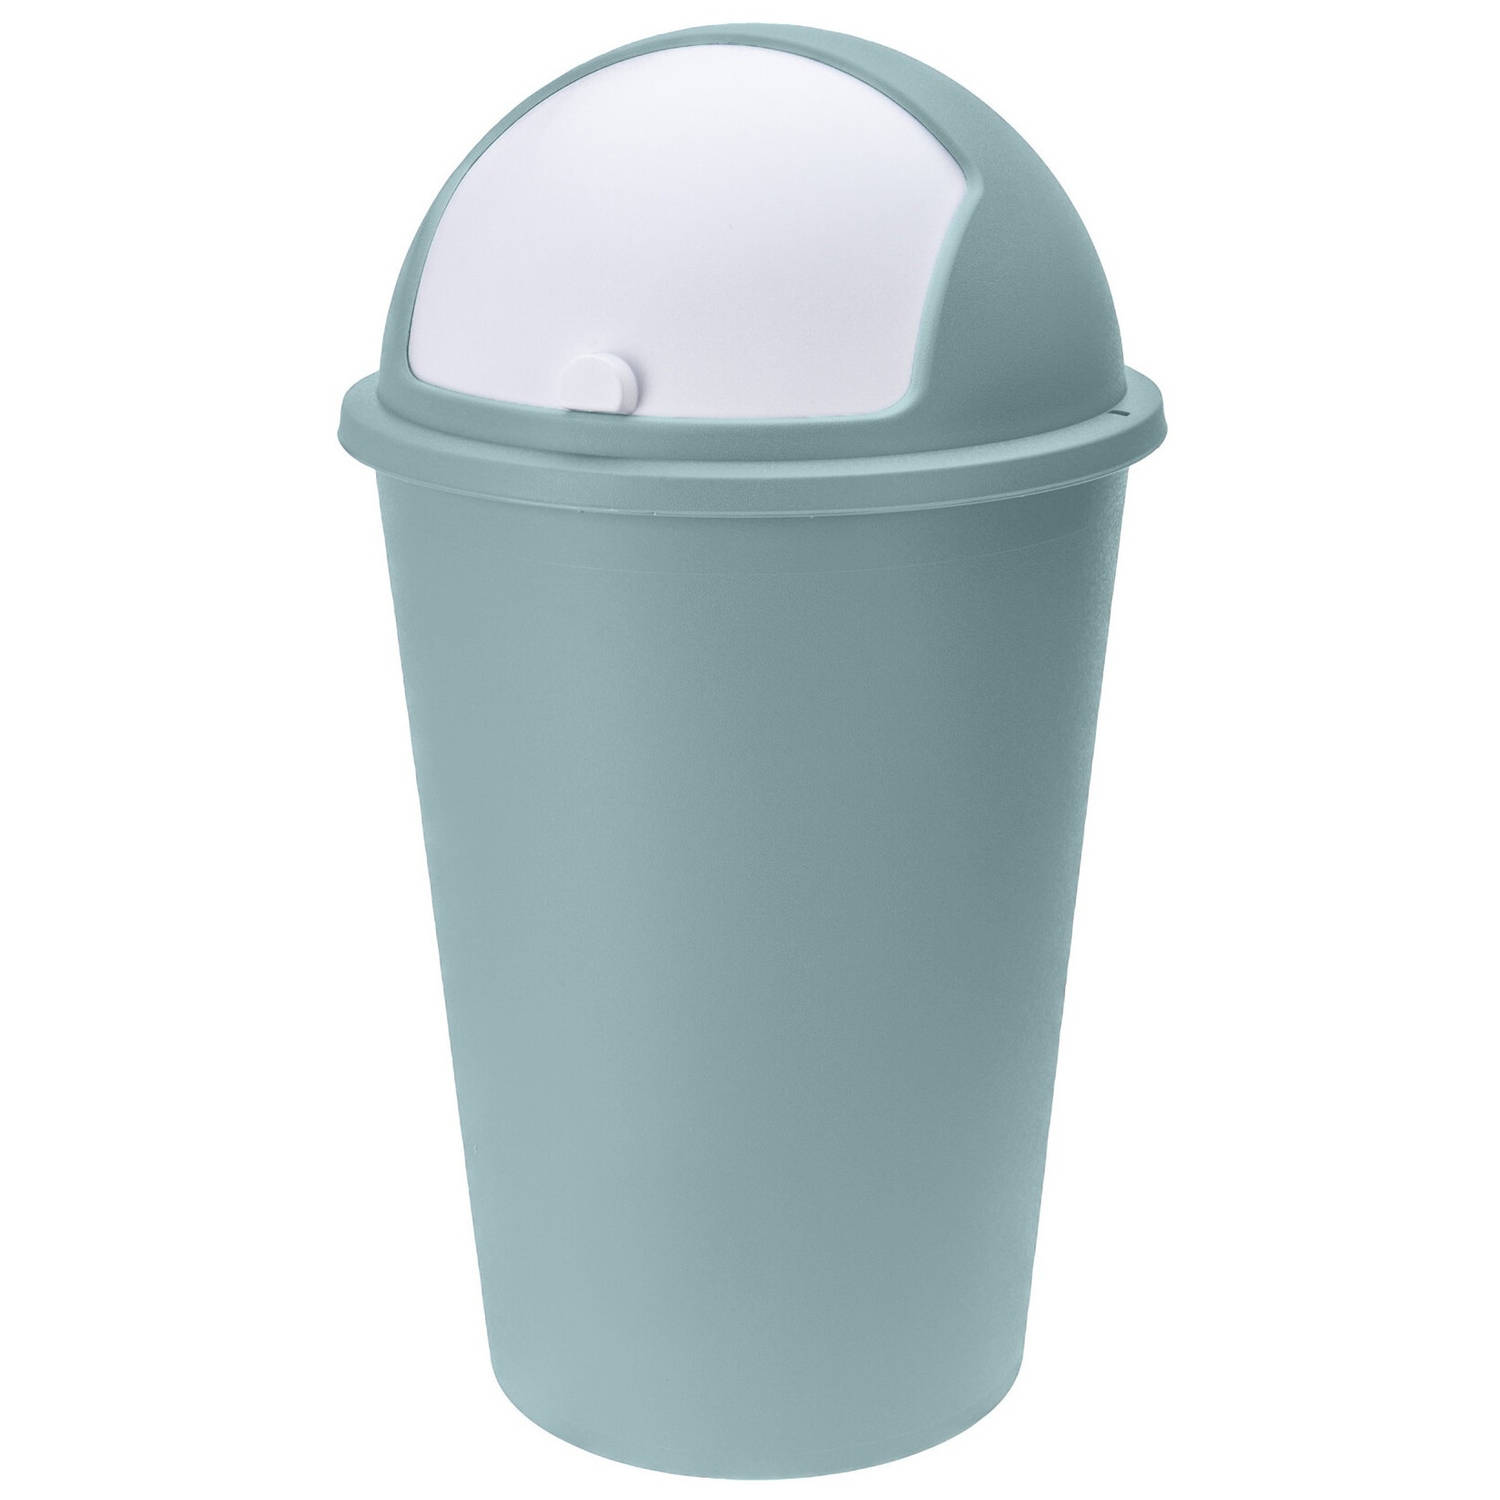 Vuilnisbak-afvalbak-prullenbak groen met deksel 50 liter Prullenbakken